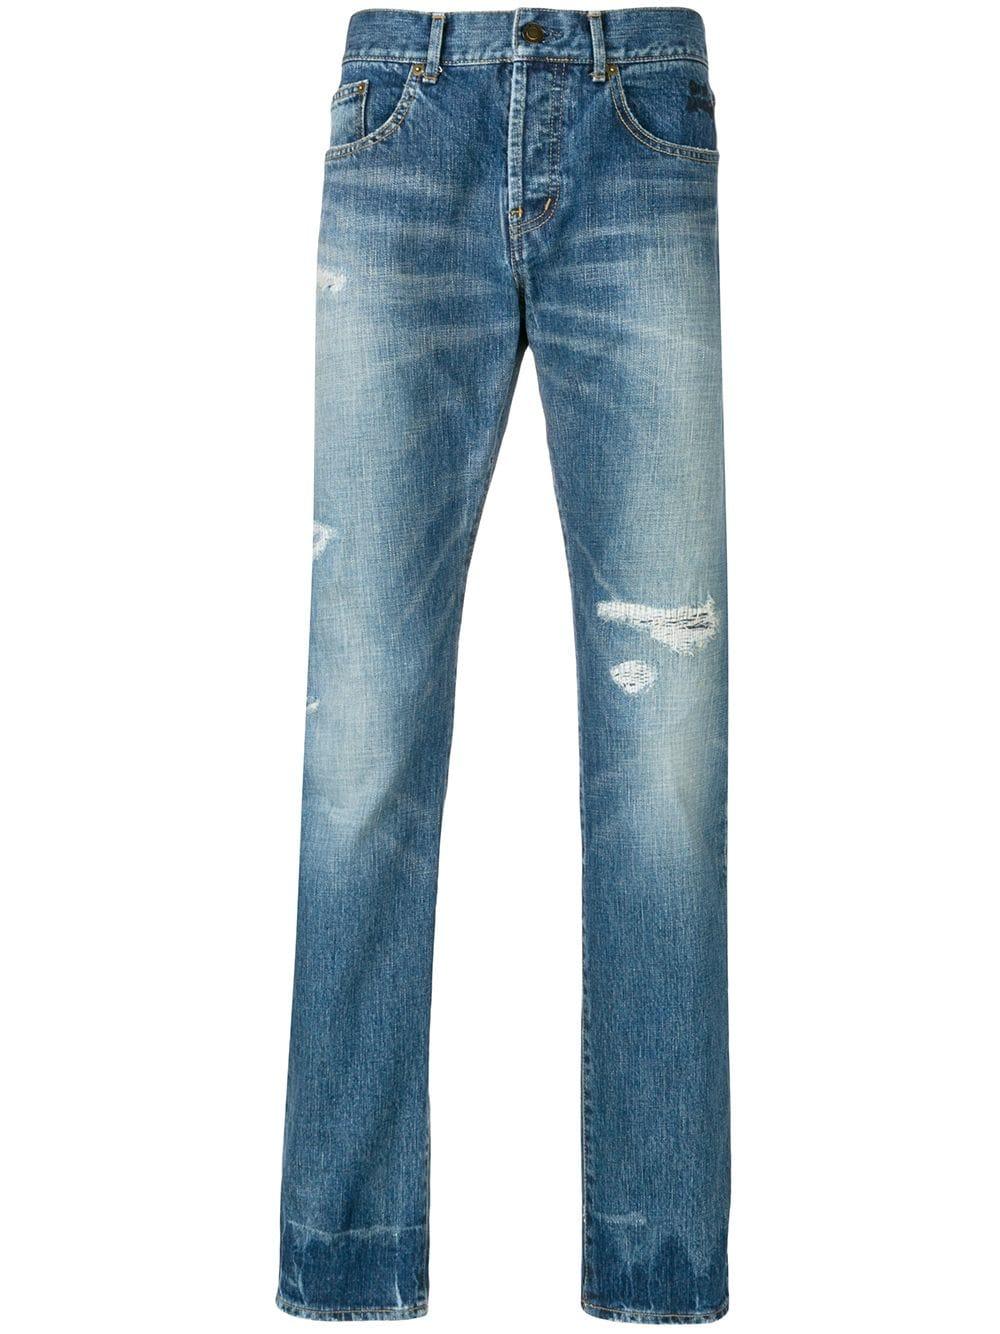 Saint Laurent Faded Denim Jeans in Blue for Men - Lyst